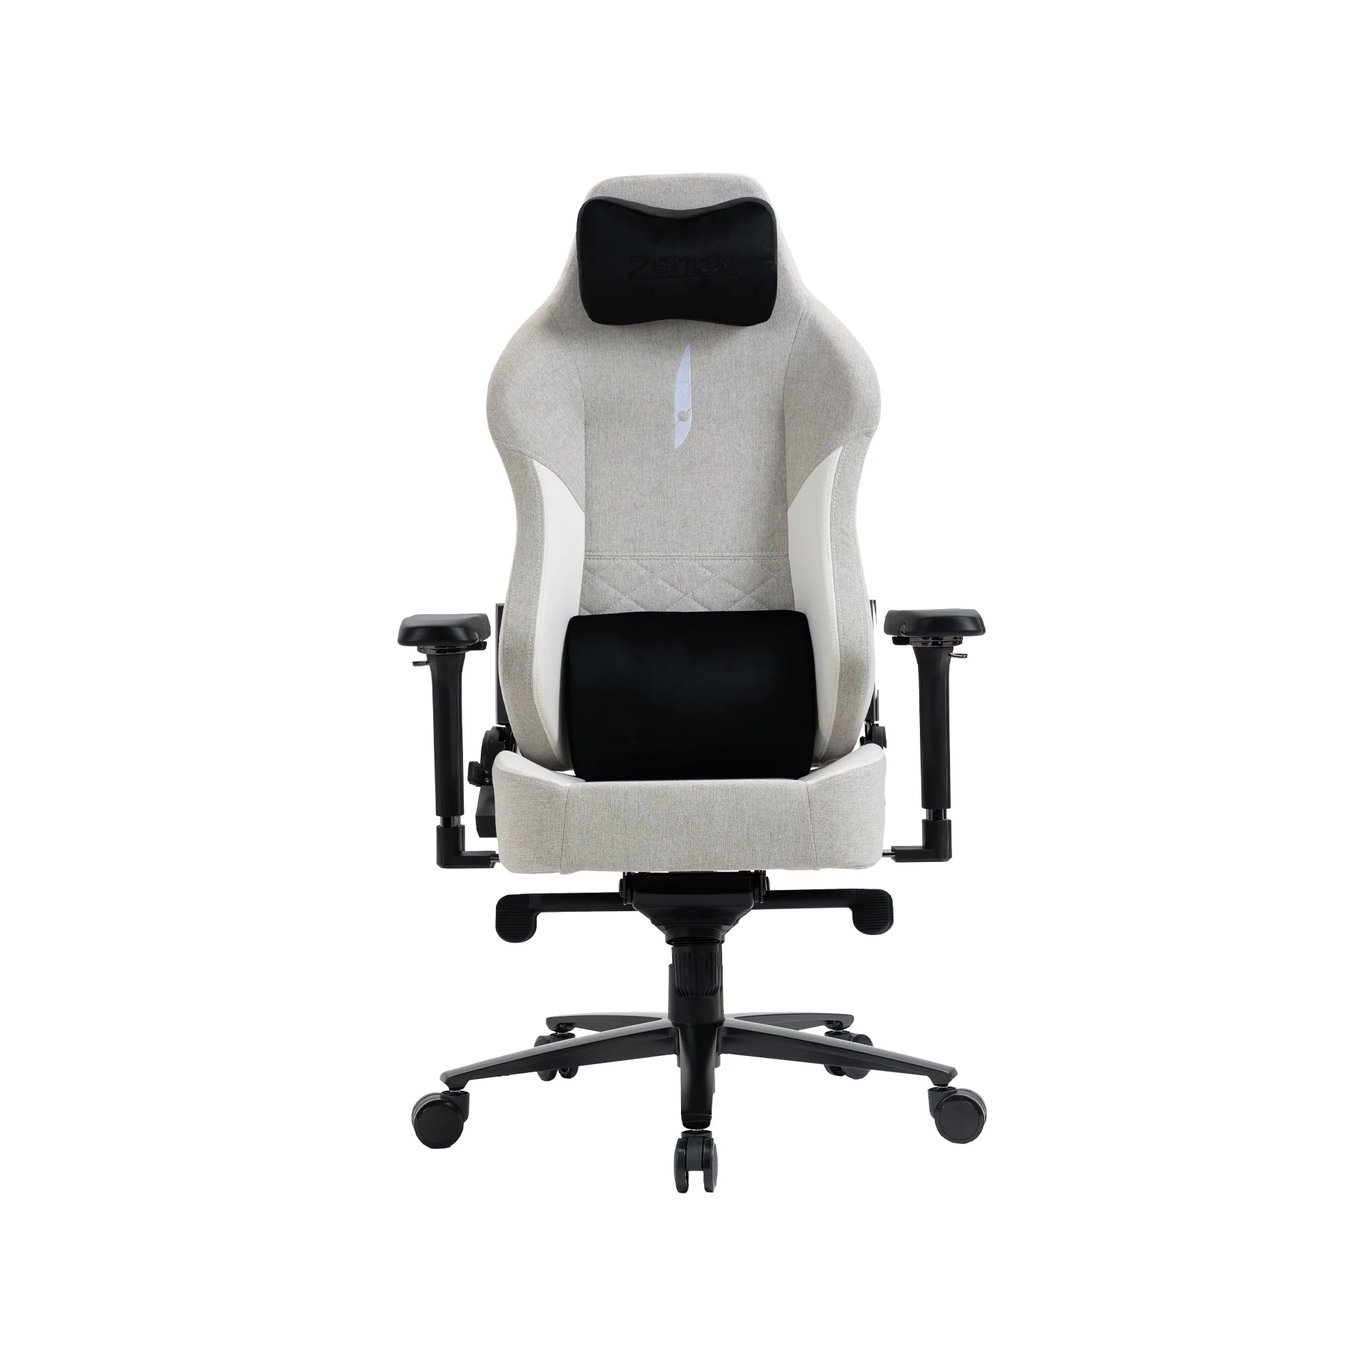 Zenox Spectre-MK2 Racing Chair  - Fabric/Light Grey /-1